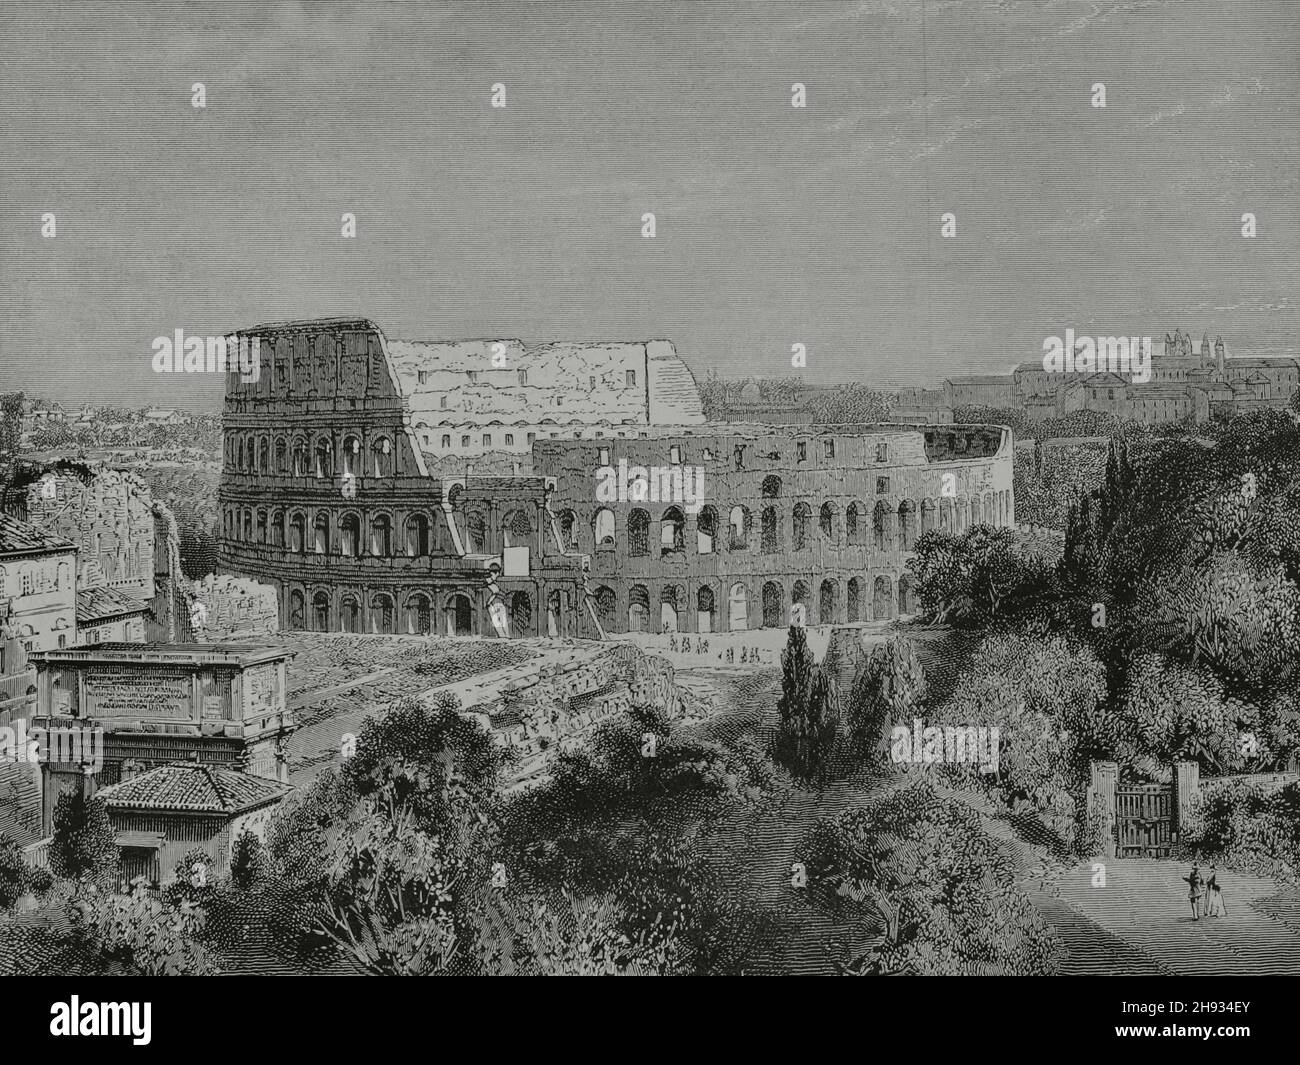 Italy, Rome. Ruins of the Colosseum or Flavian Amphitheater, 1st century AD. Engraving. La Ilustración Española y Americana, 1882. Stock Photo